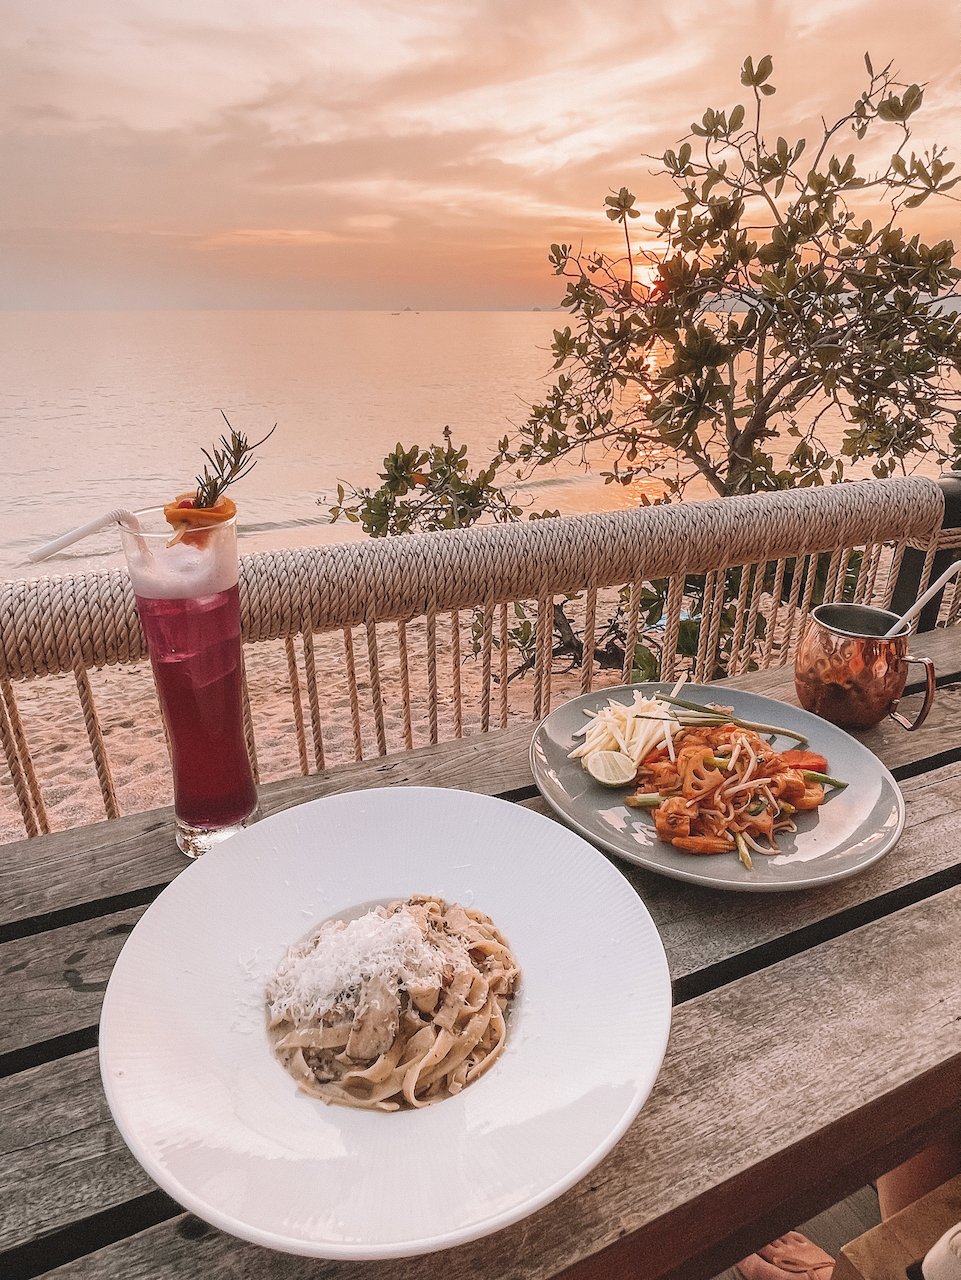 Pasta dinner during sunset at Reeve Beach Club - Ao Nang - Krabi - Thailand